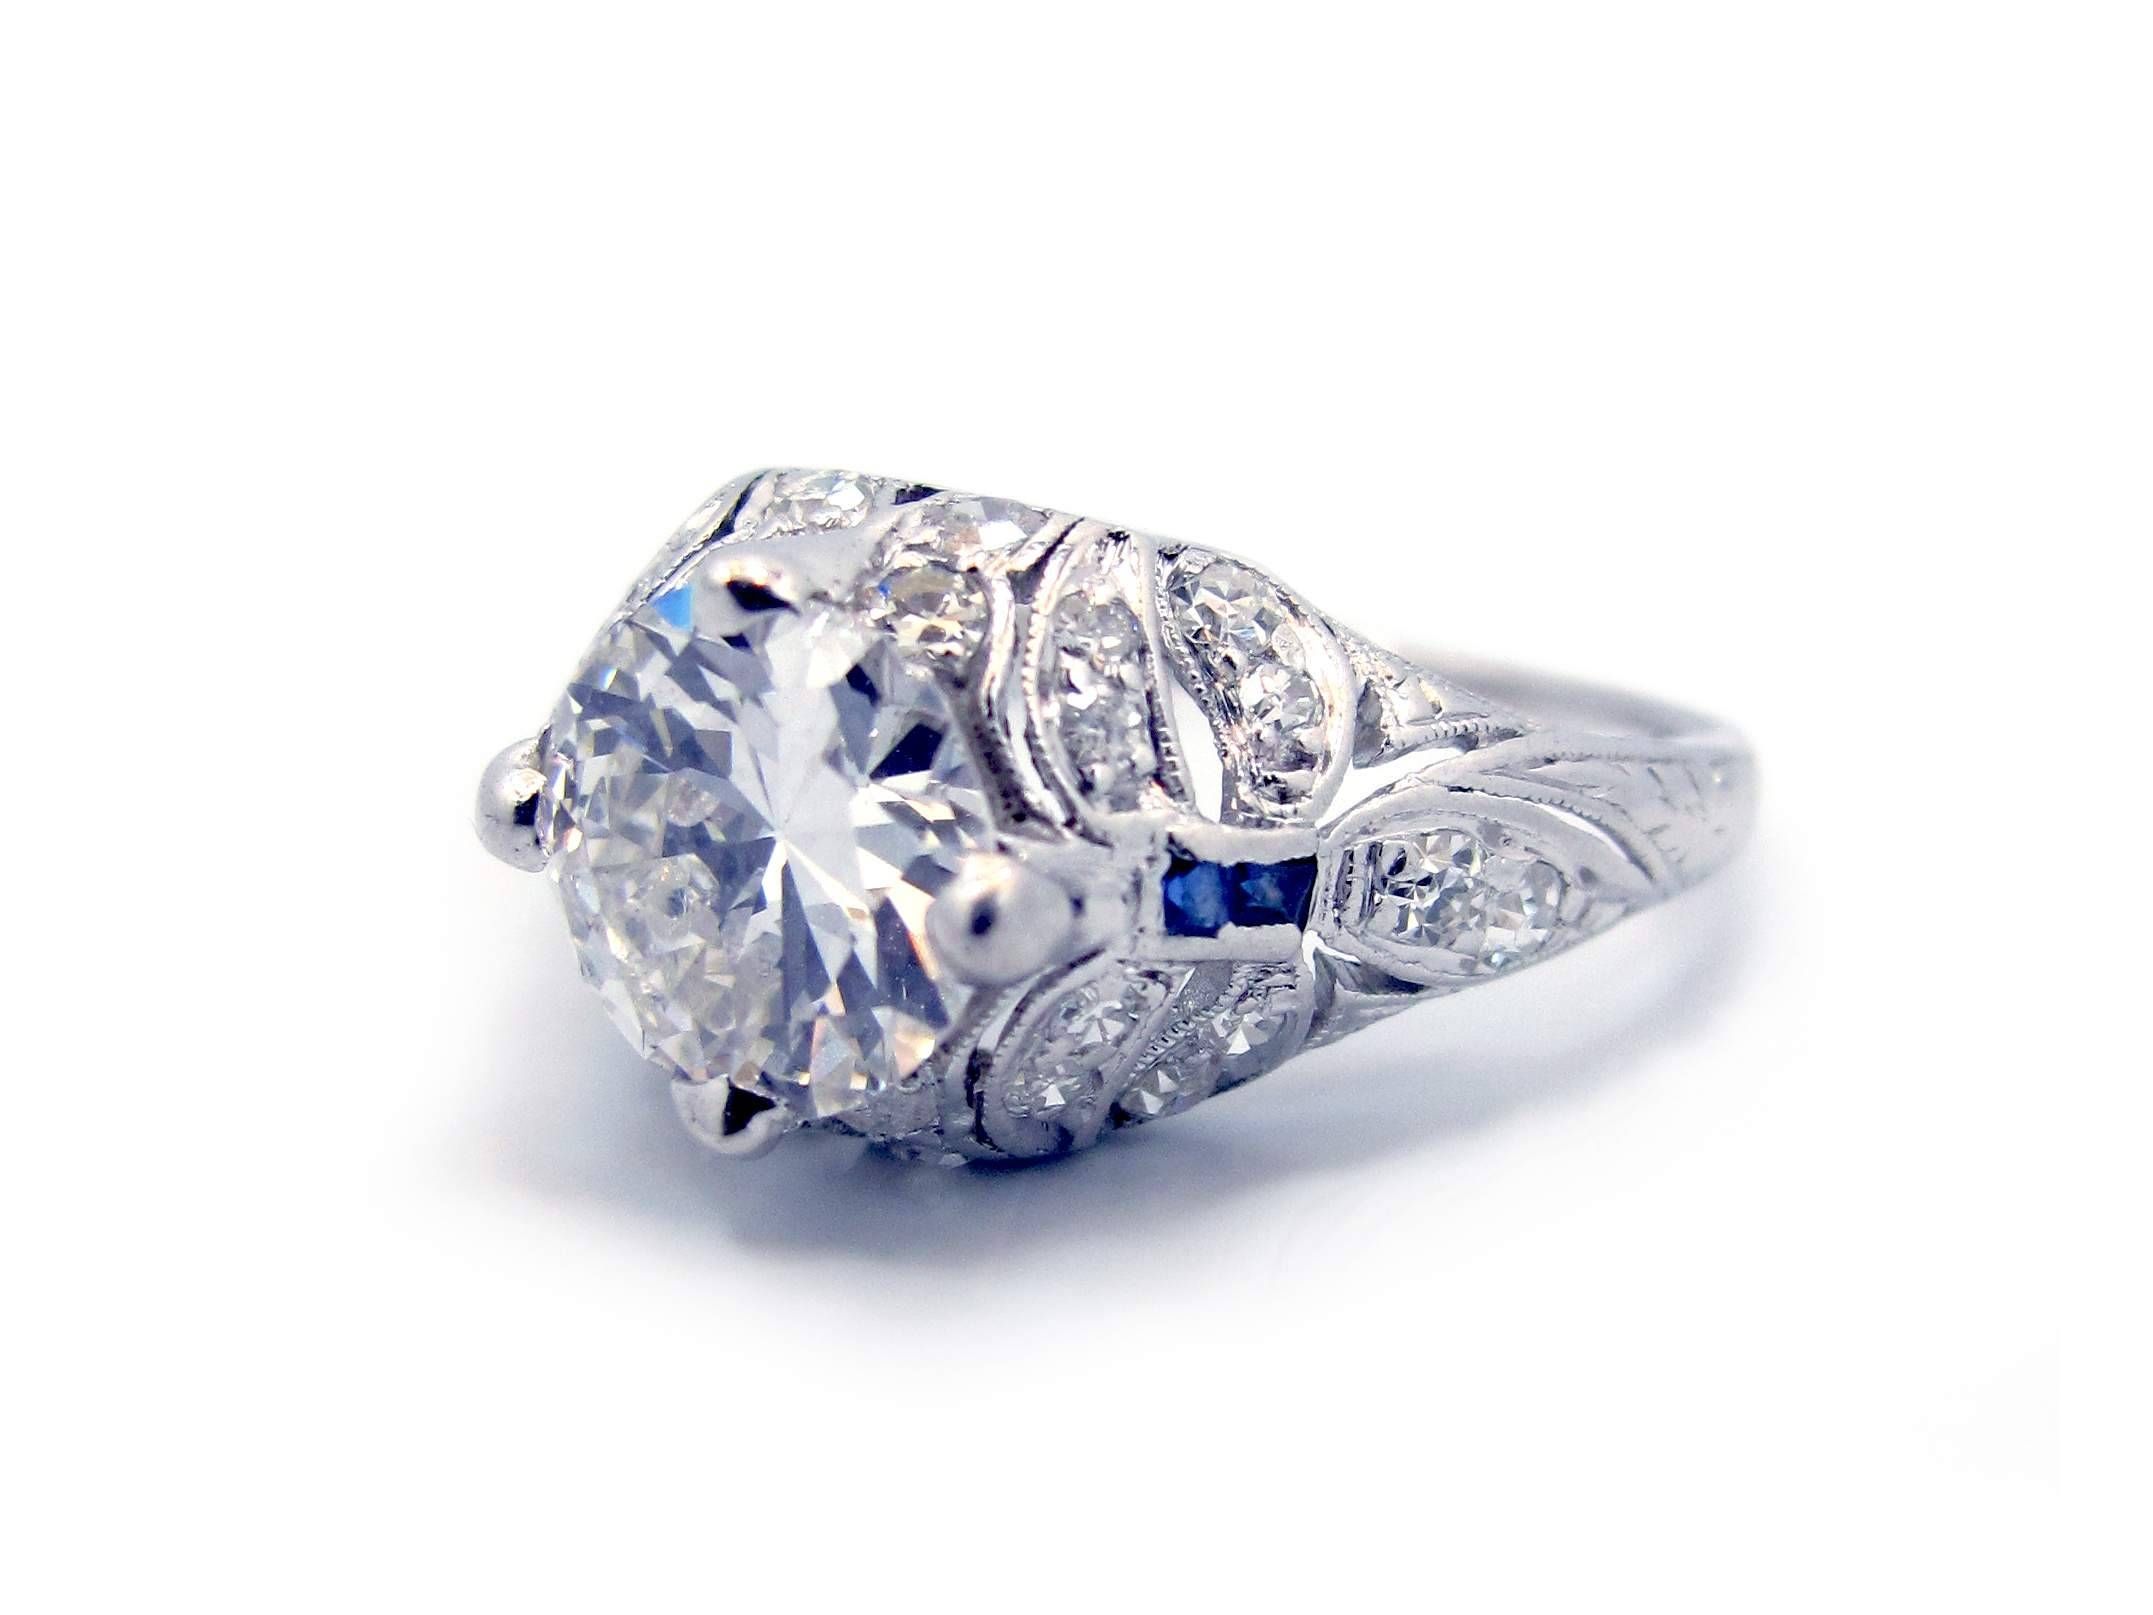 Vintage Inspired Platinum Diamond And Sapphire Engagement Ring Intended For Platinum Diamond And Sapphire Engagement Rings (View 4 of 15)